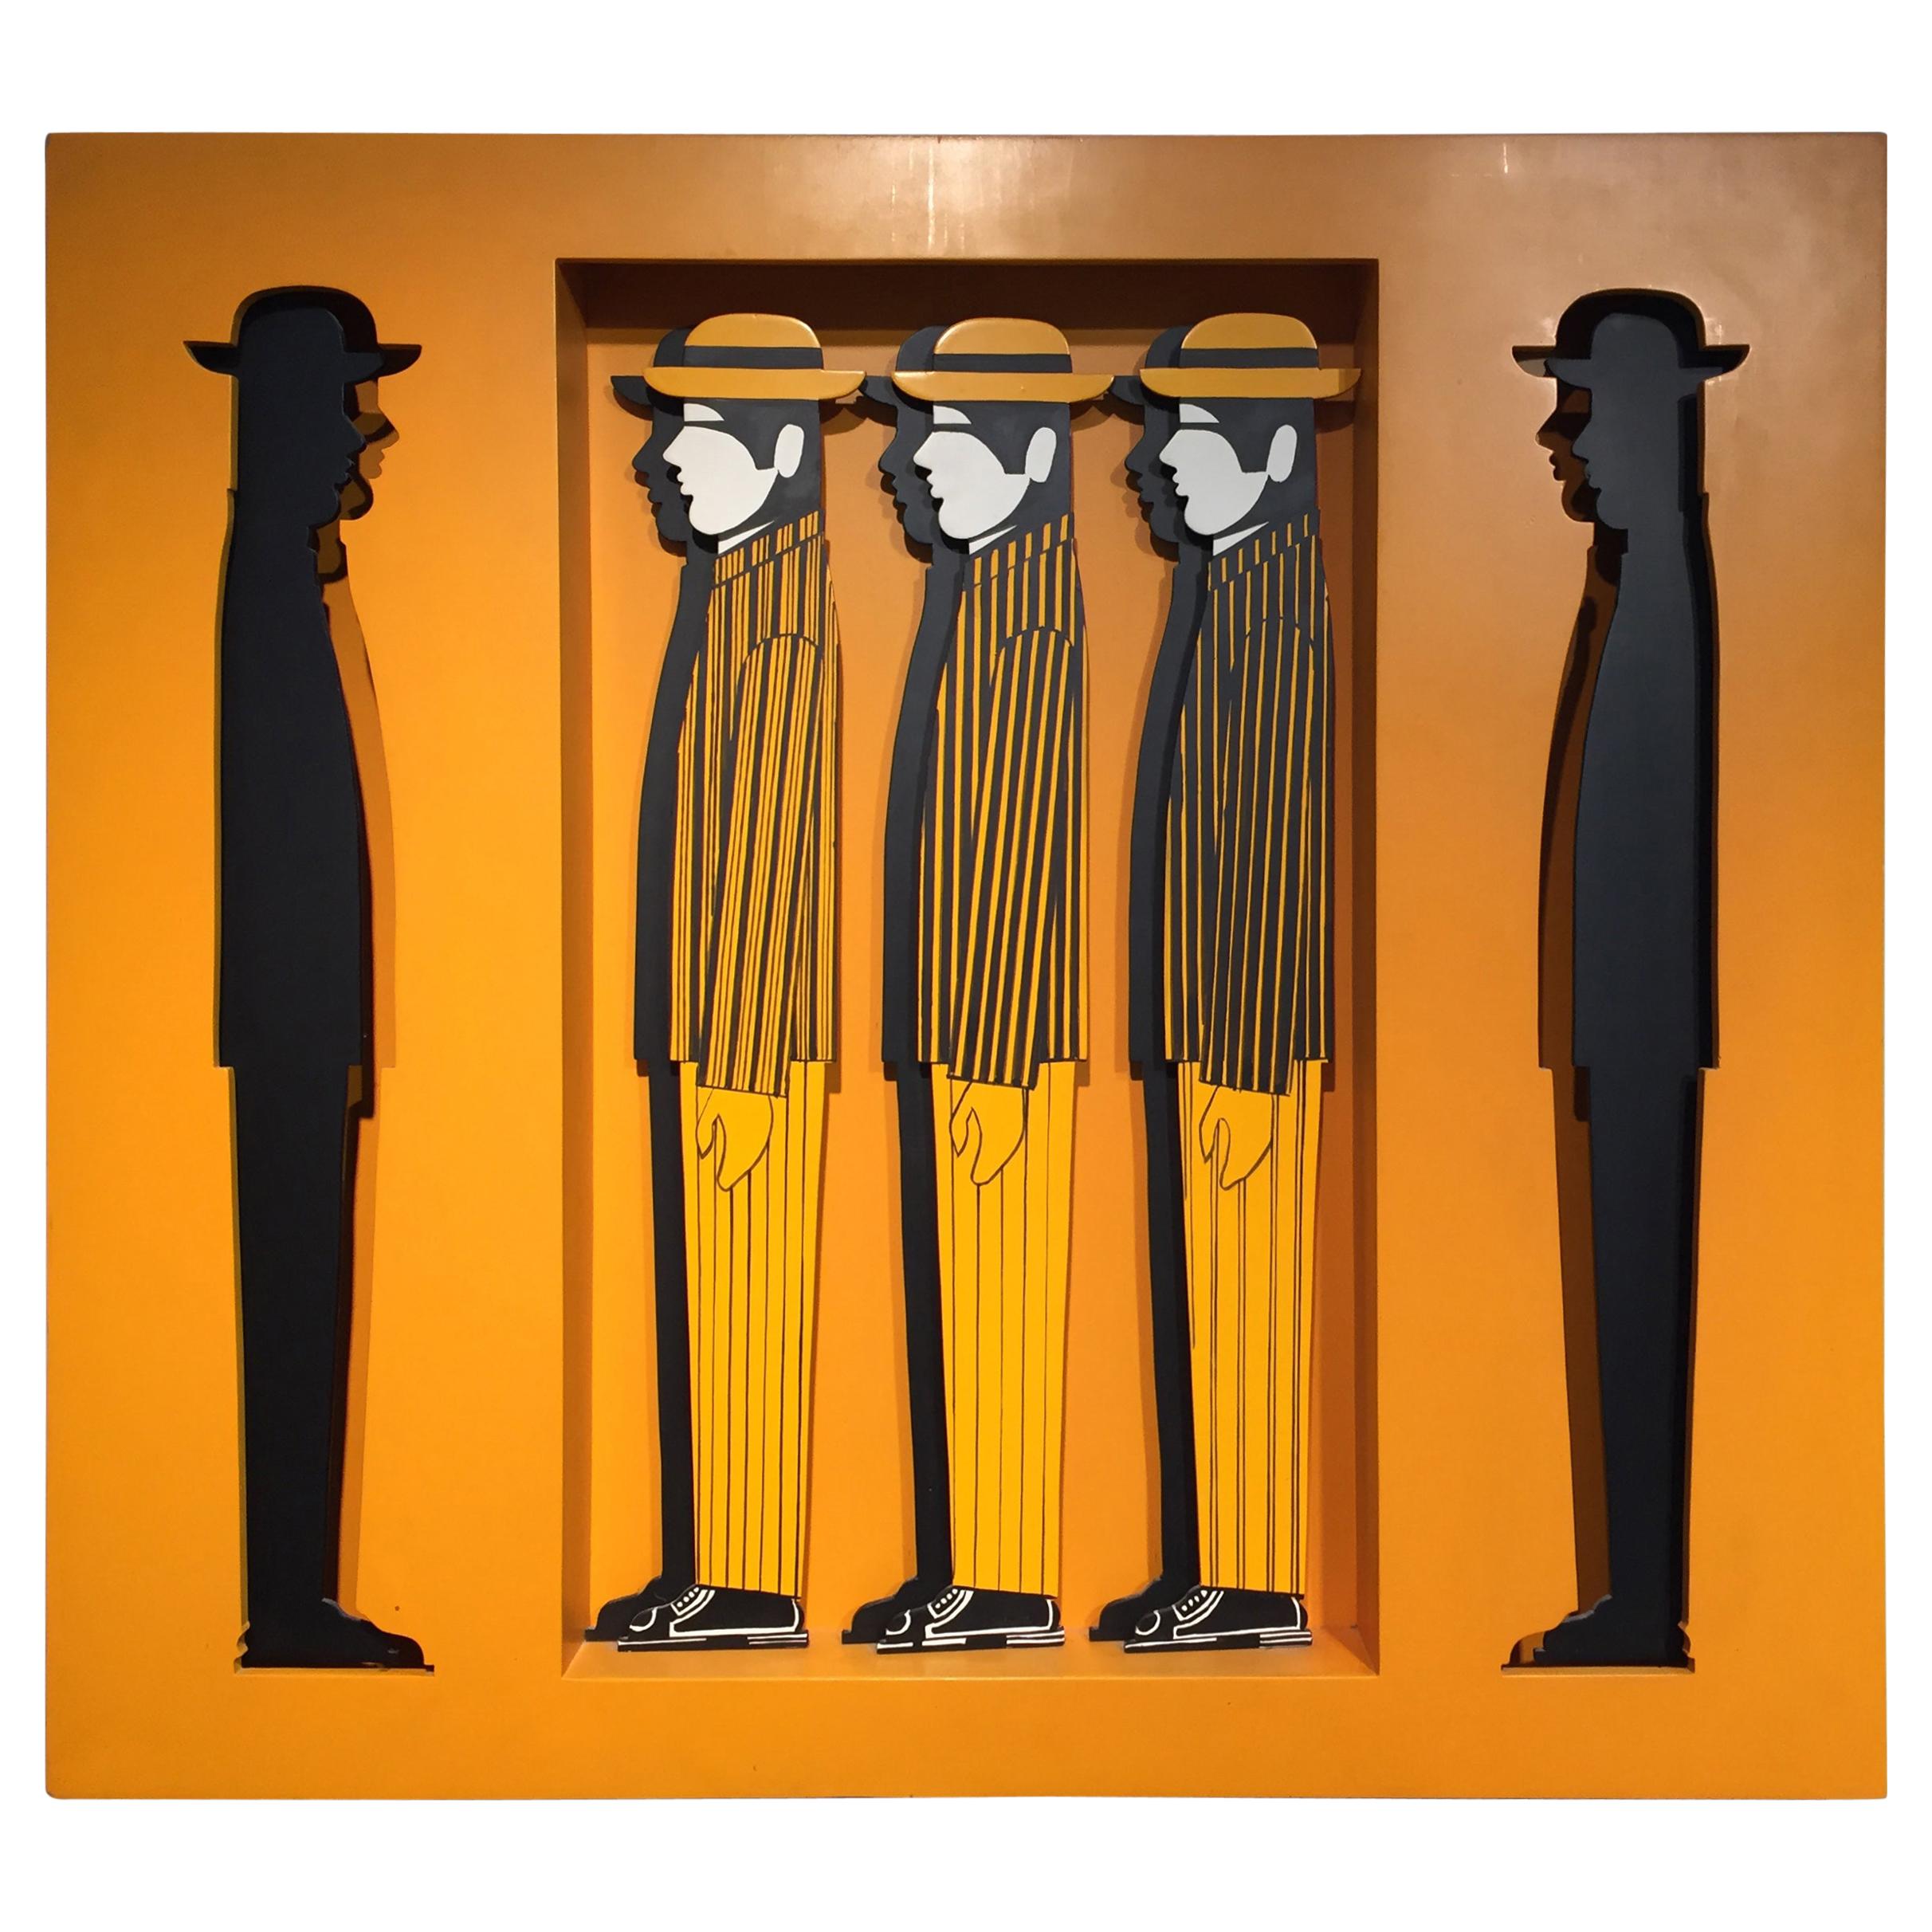 Yannis Gaitis Hand Painted Men Figures Sculpture/ Shadowbox Contemporary Art